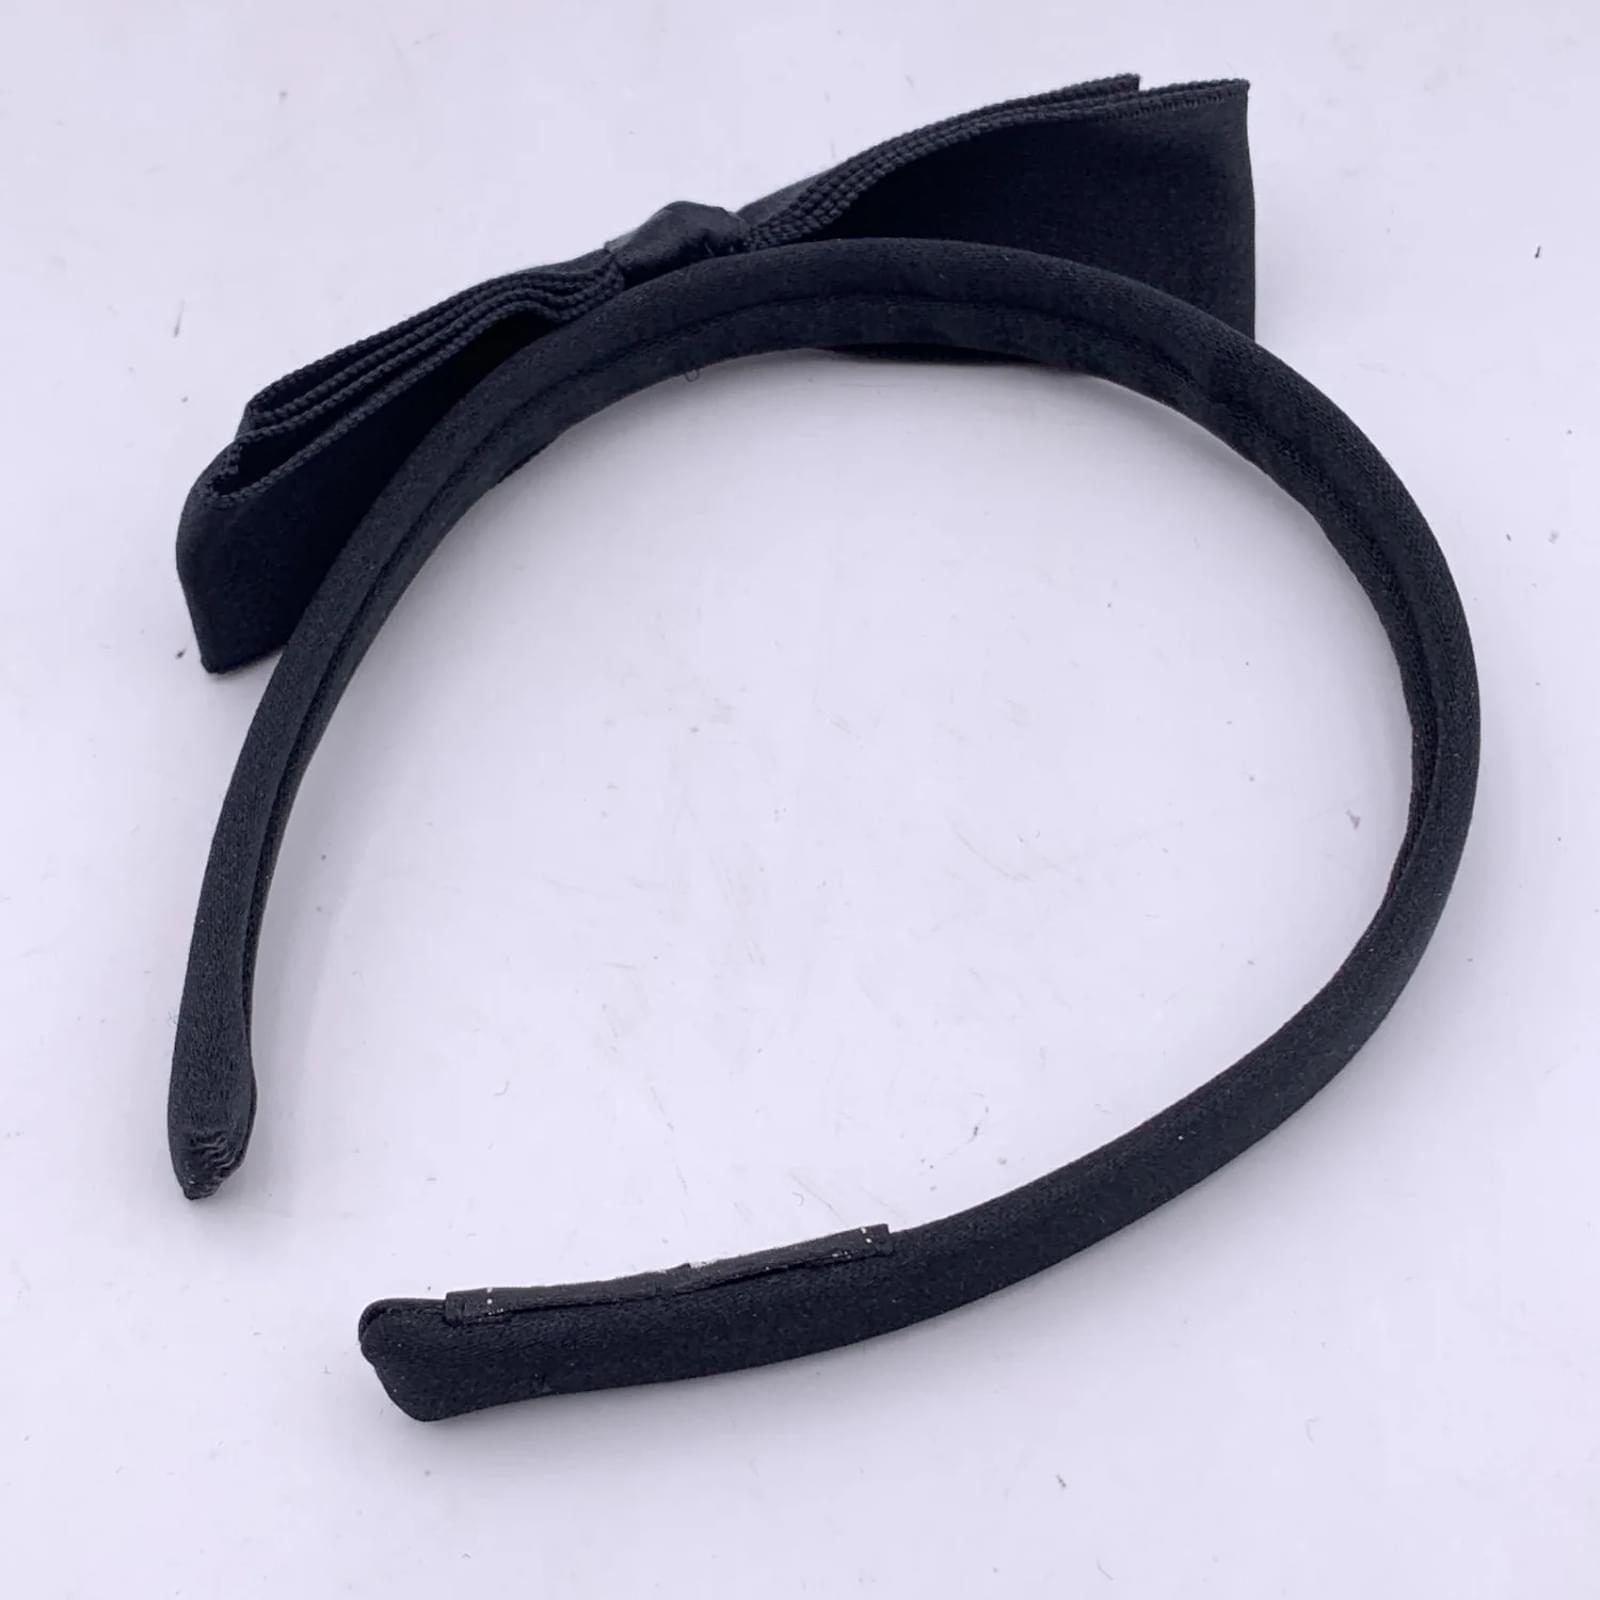 Chanel Vintage Bow Headband - Black Hair Accessories, Accessories